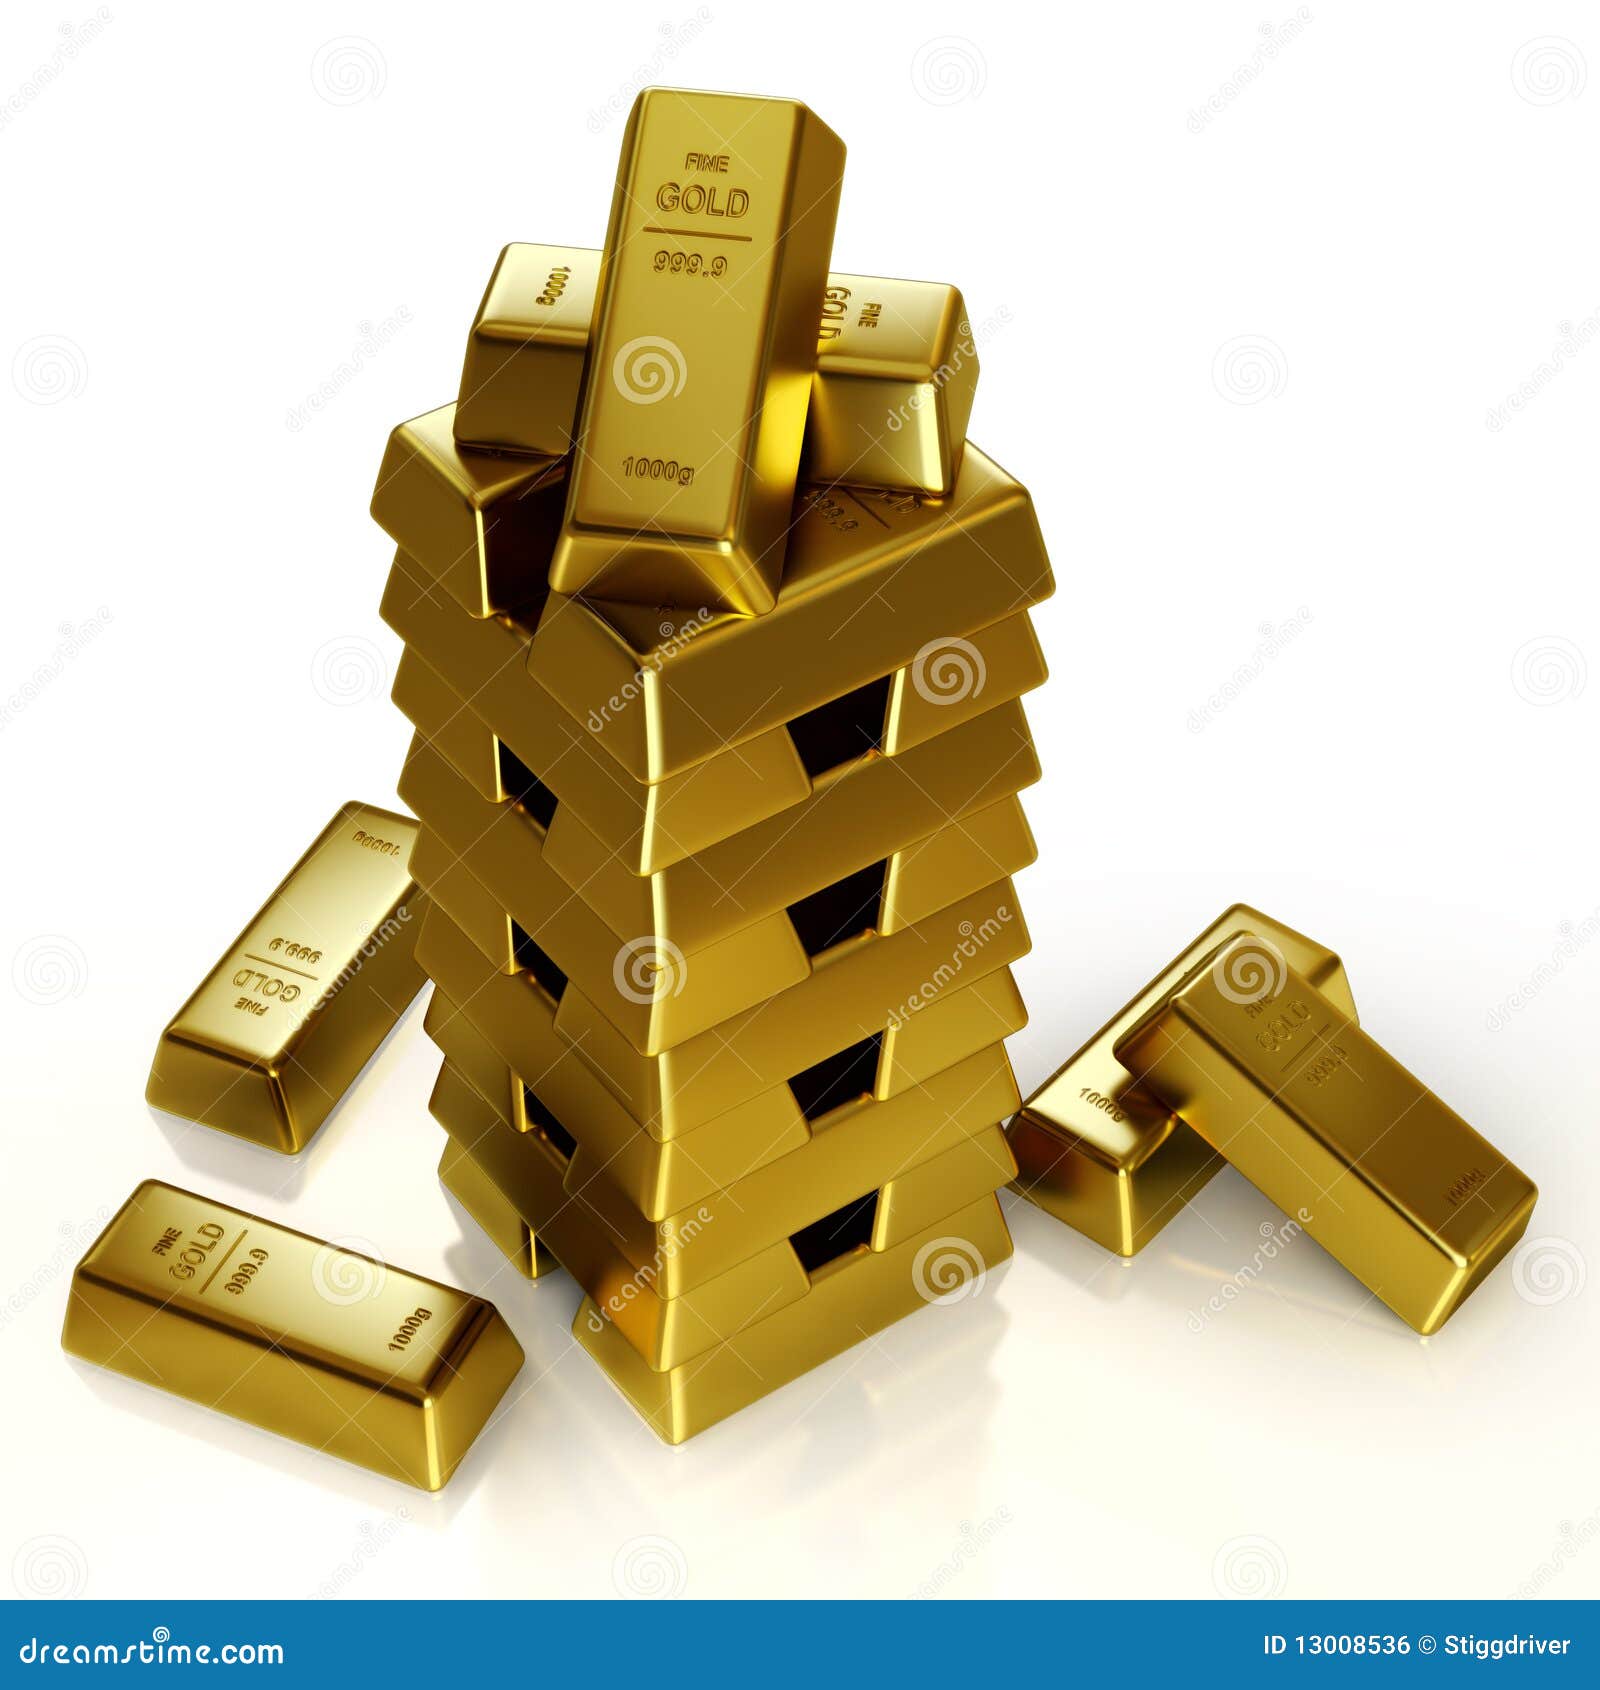 Gold bars stock illustration. Illustration of render - 13008536